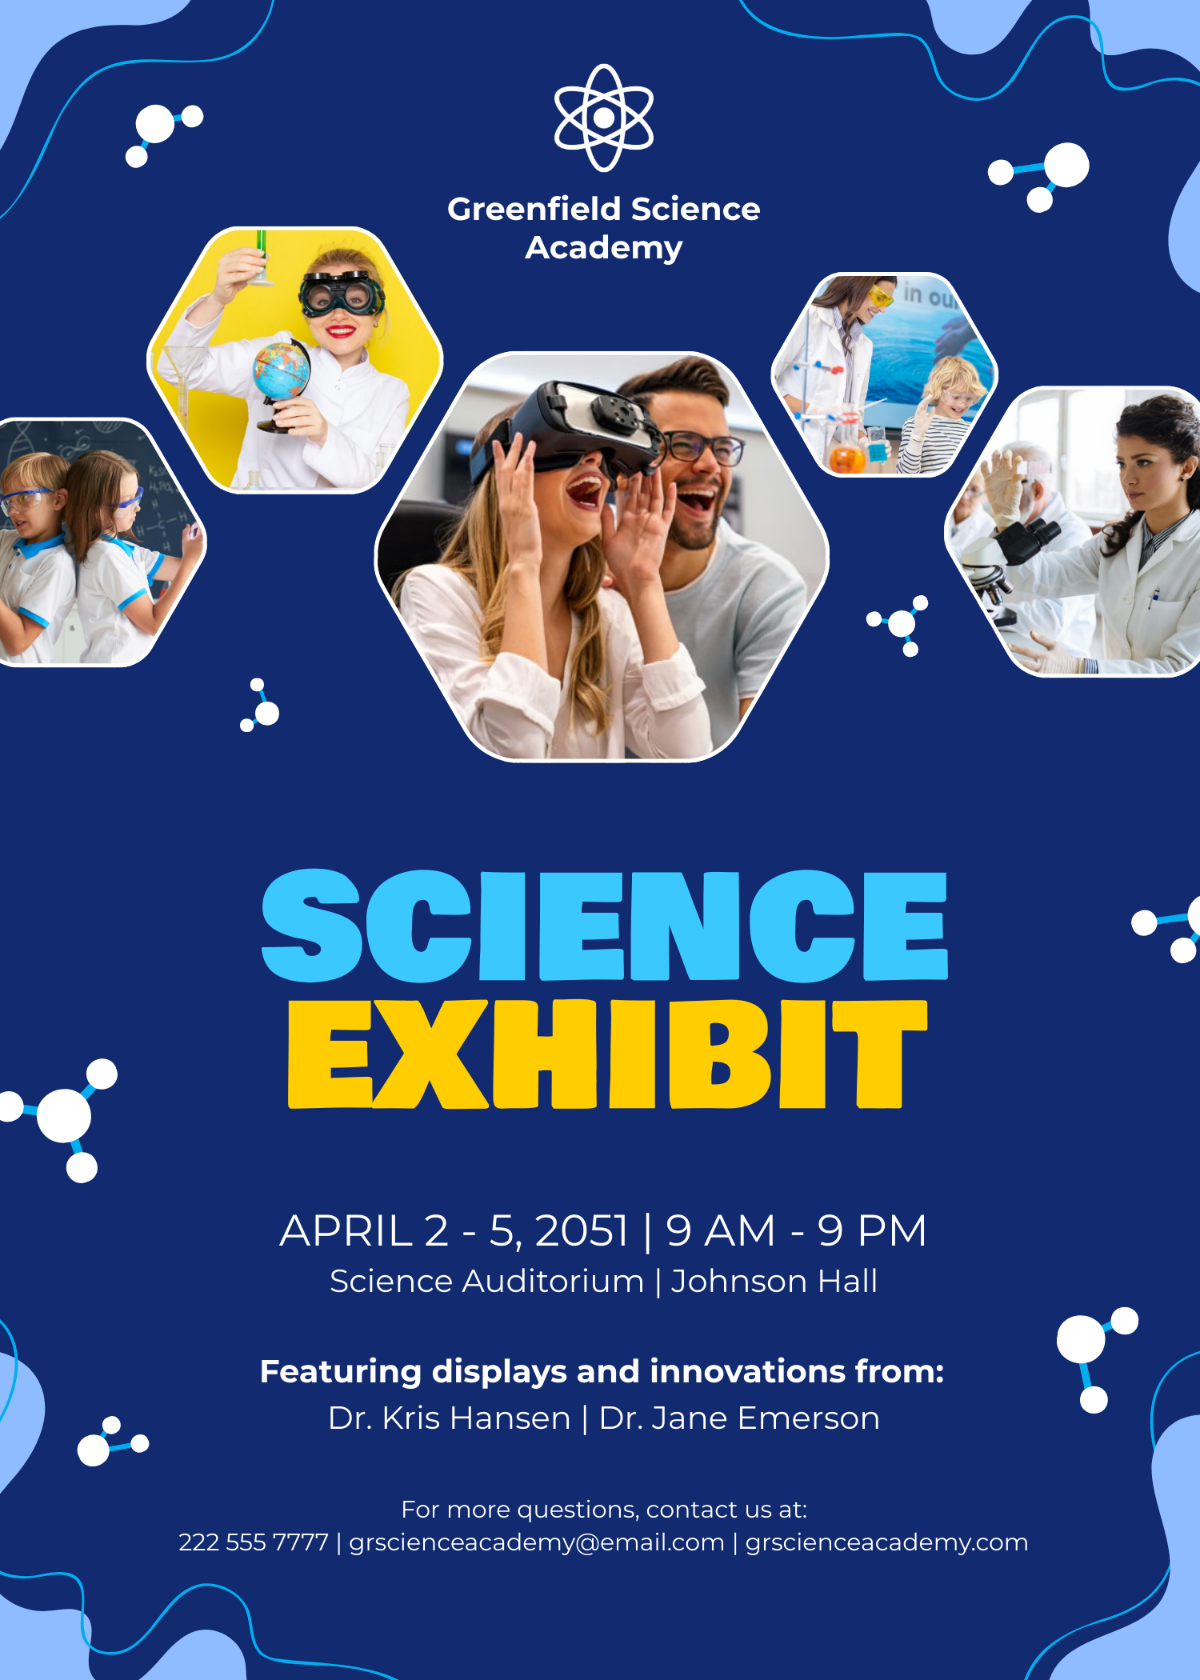 Science Exhibition Invitation